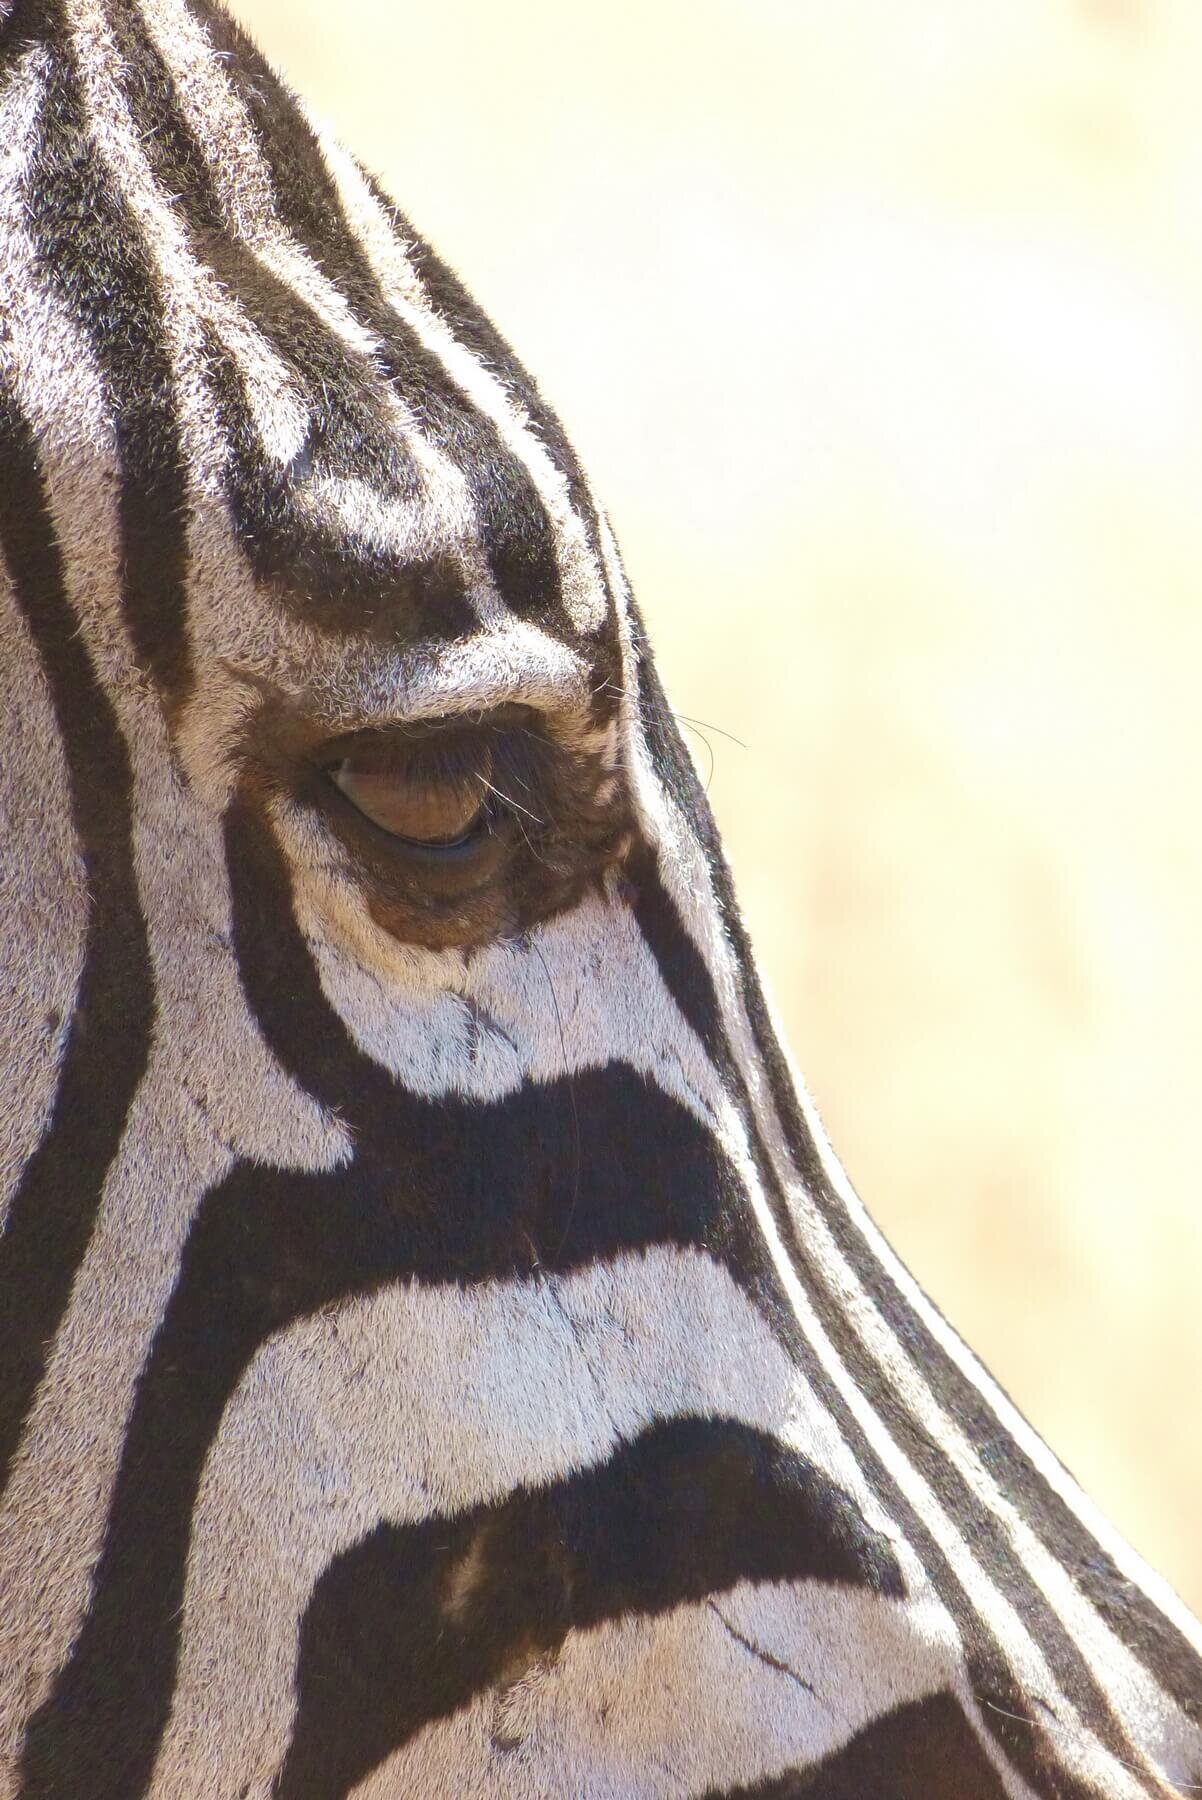 Zebra Eye. Photograph © 2021 H. Allen Benowitz. All Rights Reserved.